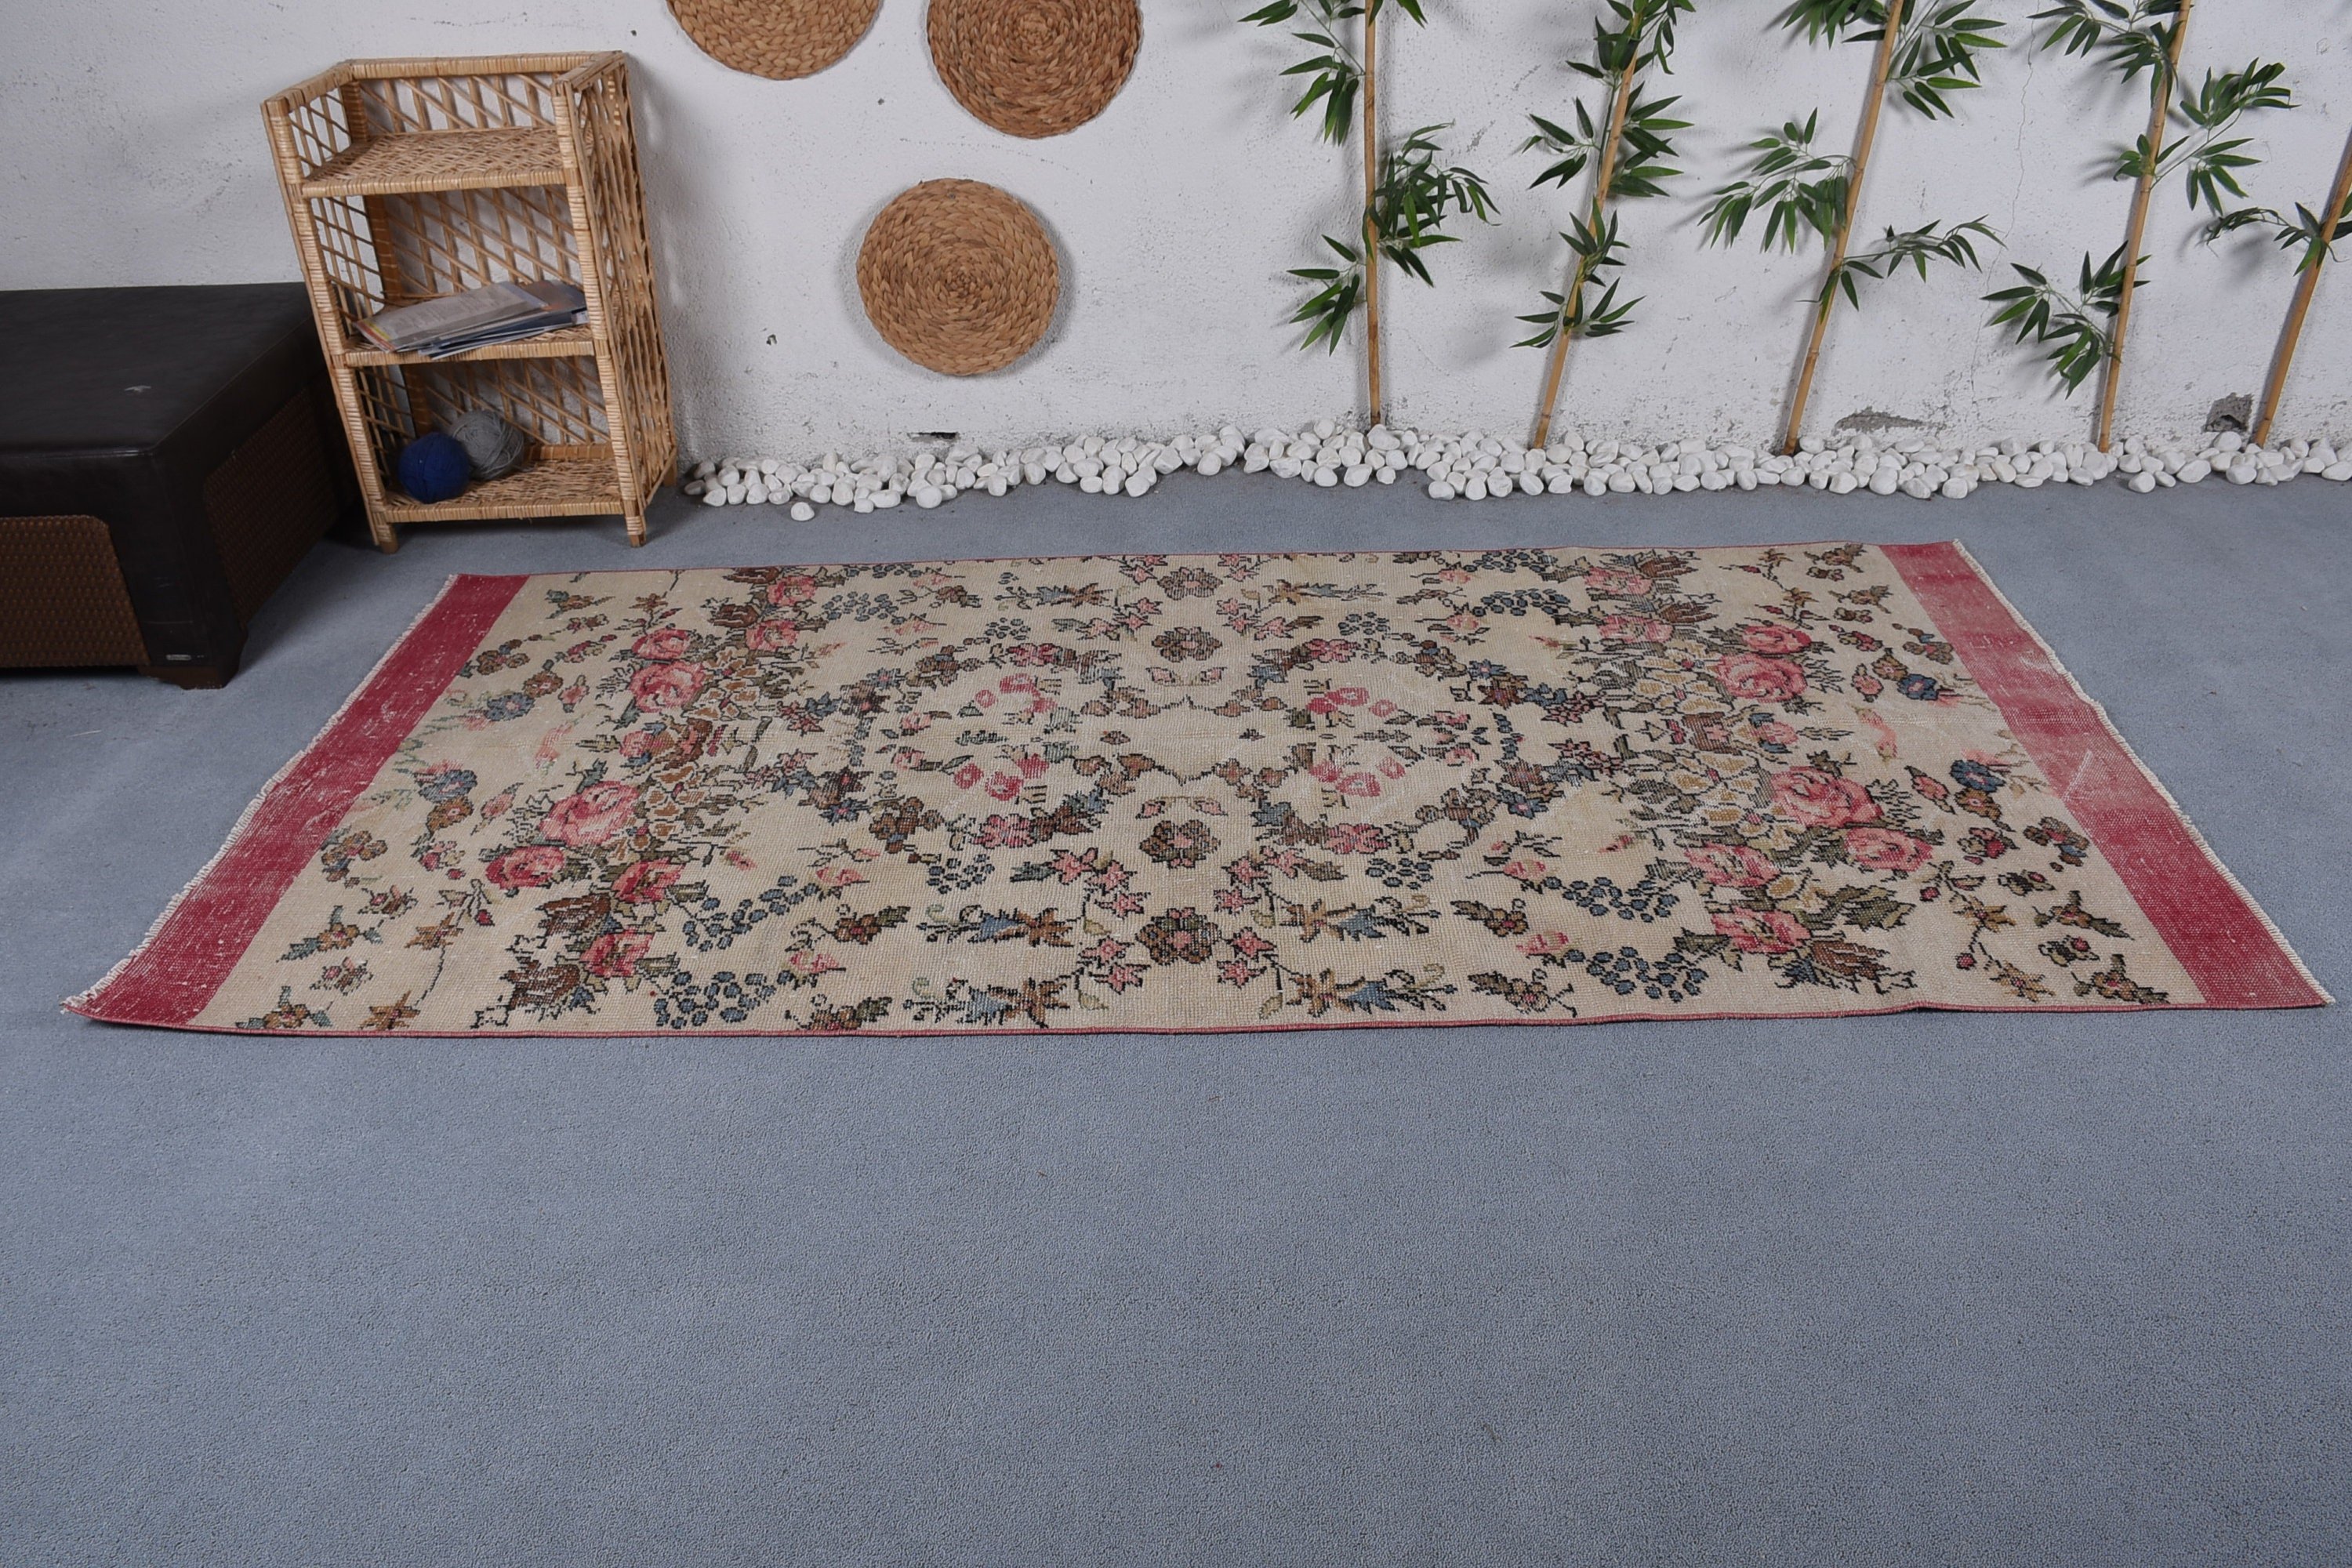 Anatolian Rug, Living Room Rug, Dorm Rug, Turkish Rug, 4.1x8.6 ft Area Rugs, Vintage Rugs, Beige Antique Rugs, Dining Room Rugs, Cool Rugs